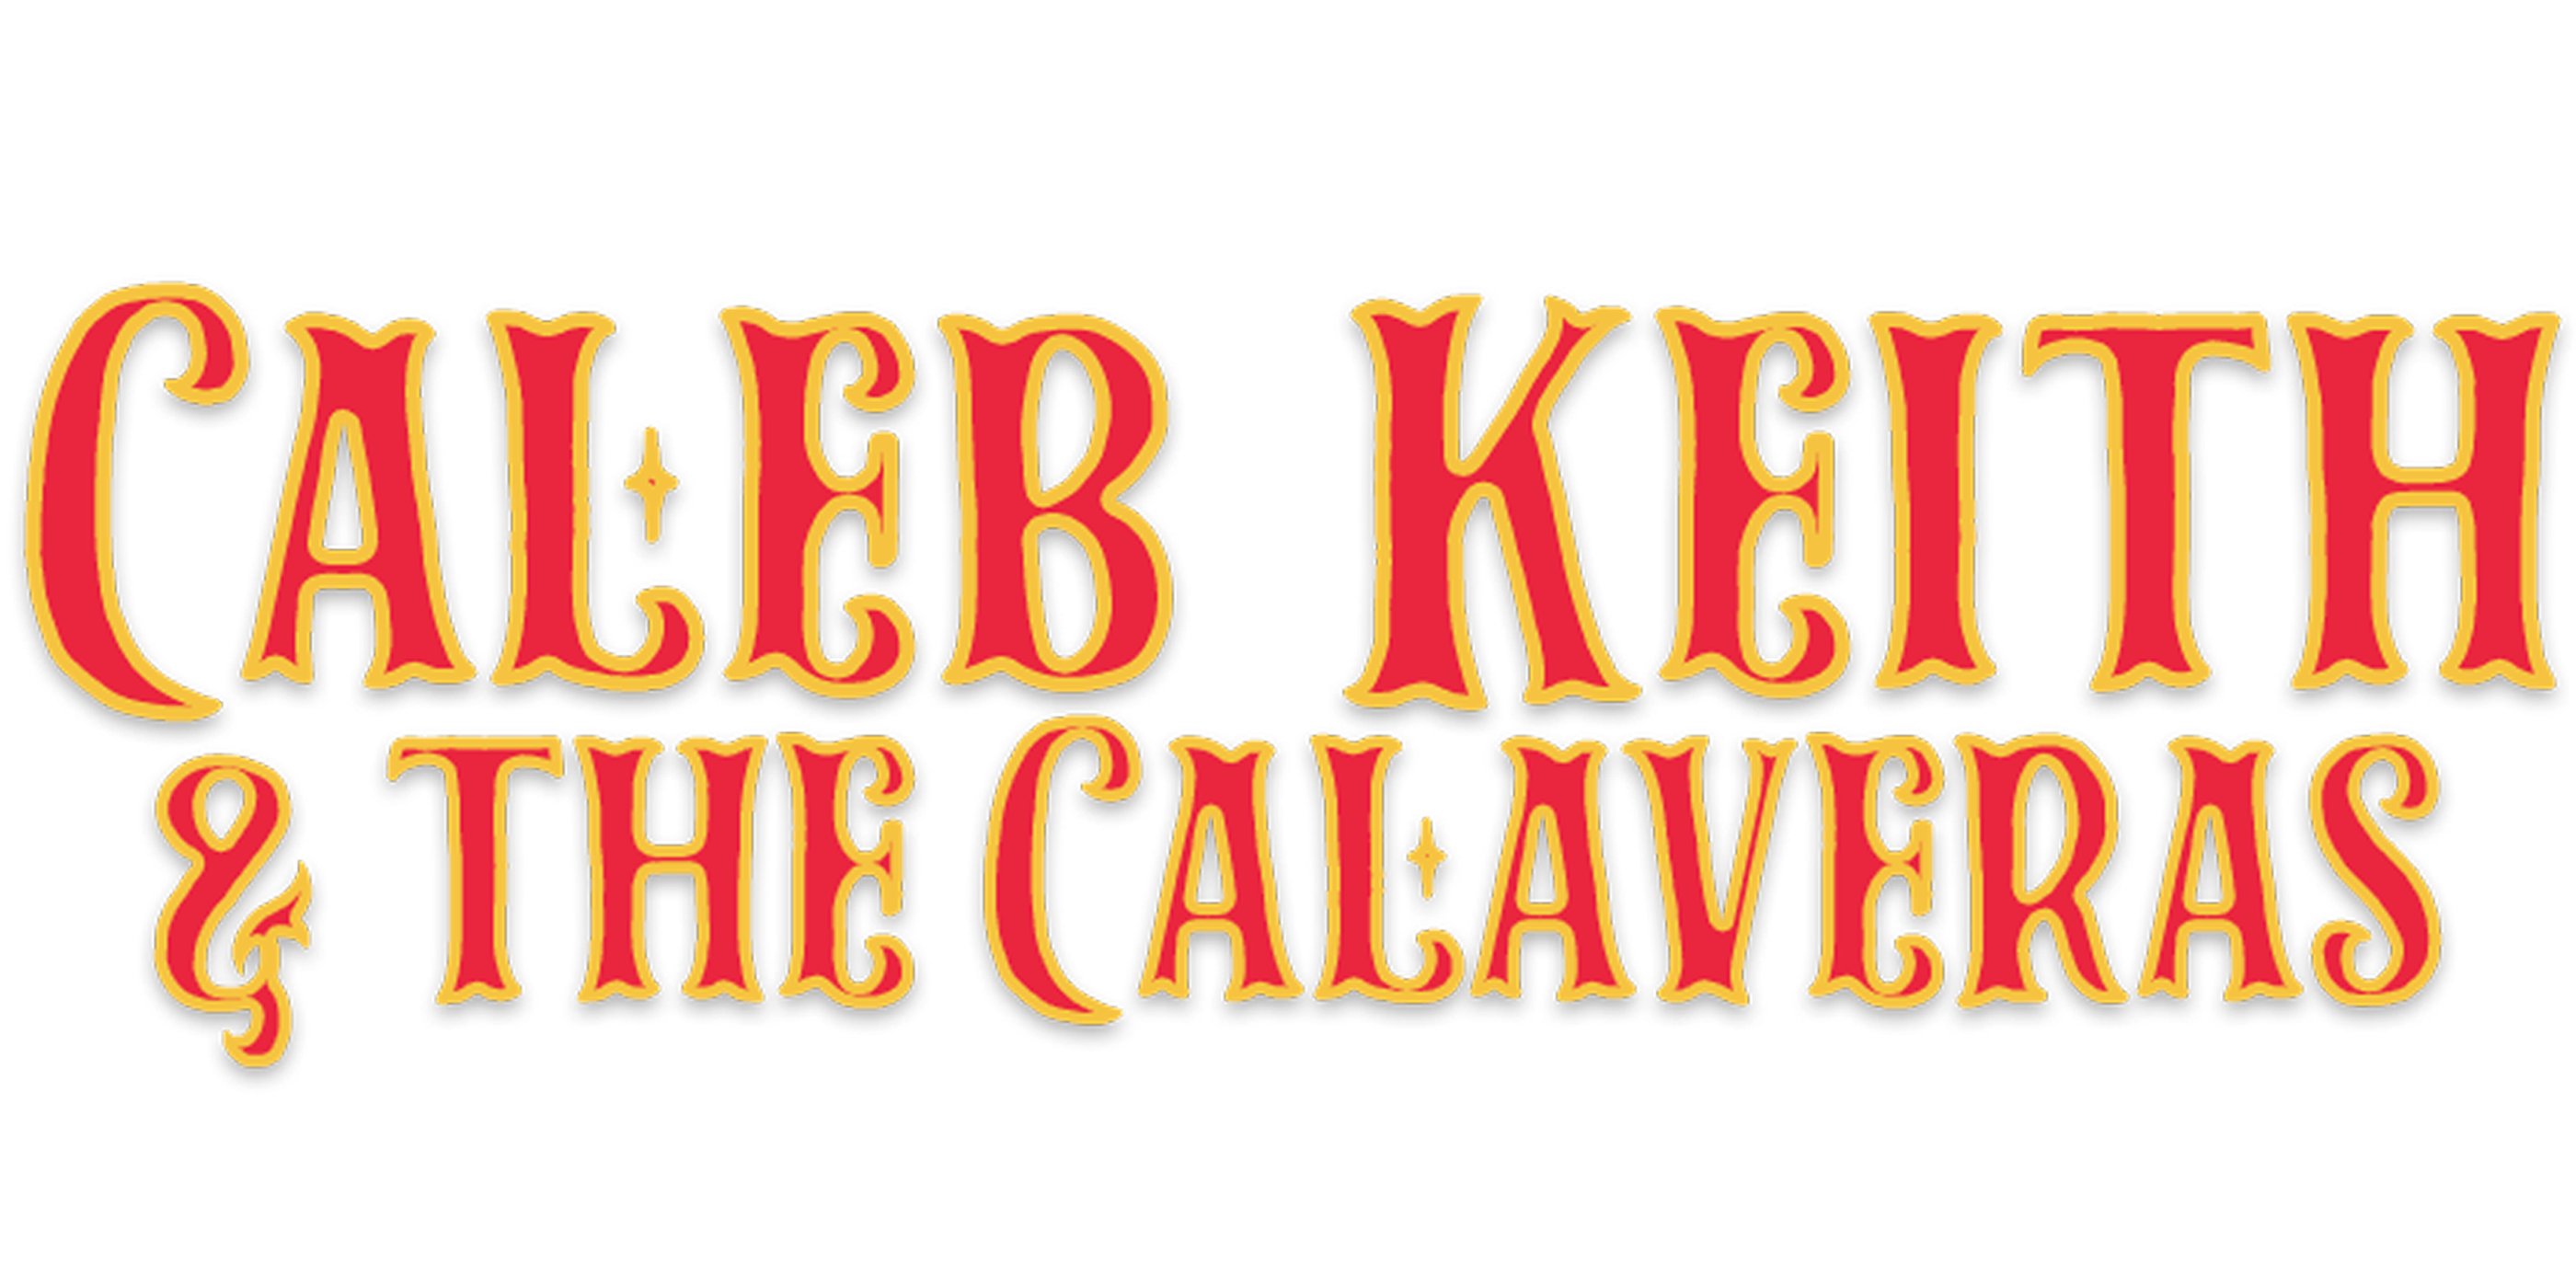 Caleb Keith &amp; the Calaveras